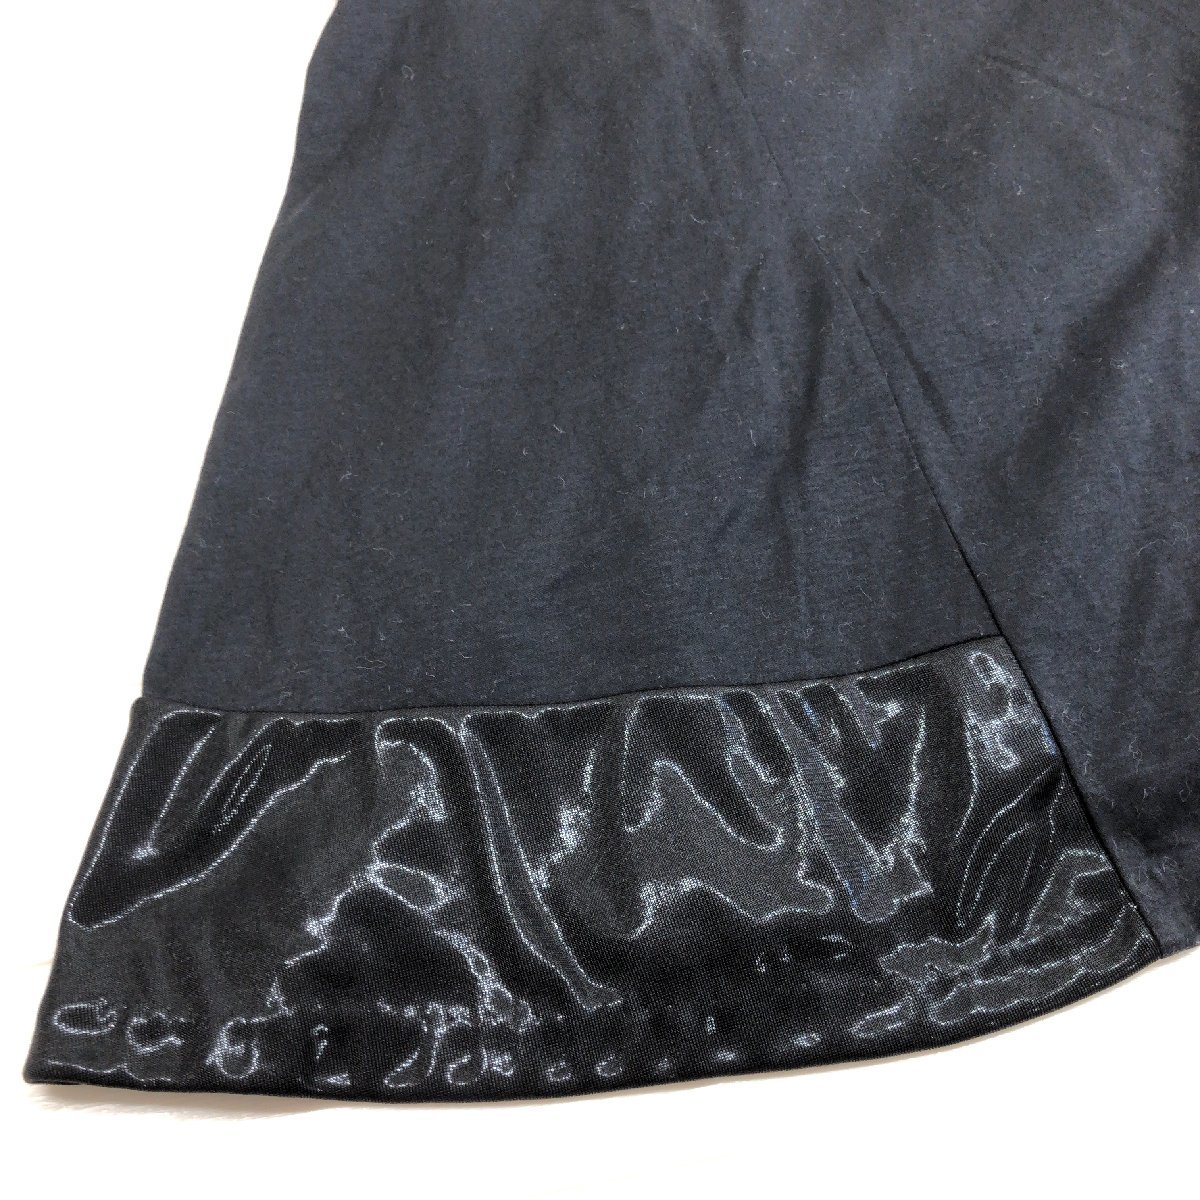 JILL STUART ジルスチュアート リボン装飾 フレア ドレス ワンピース 0(S) 黒 ブラック ノースリーブ 日本製 国内正規品 レディース 女性用_画像6